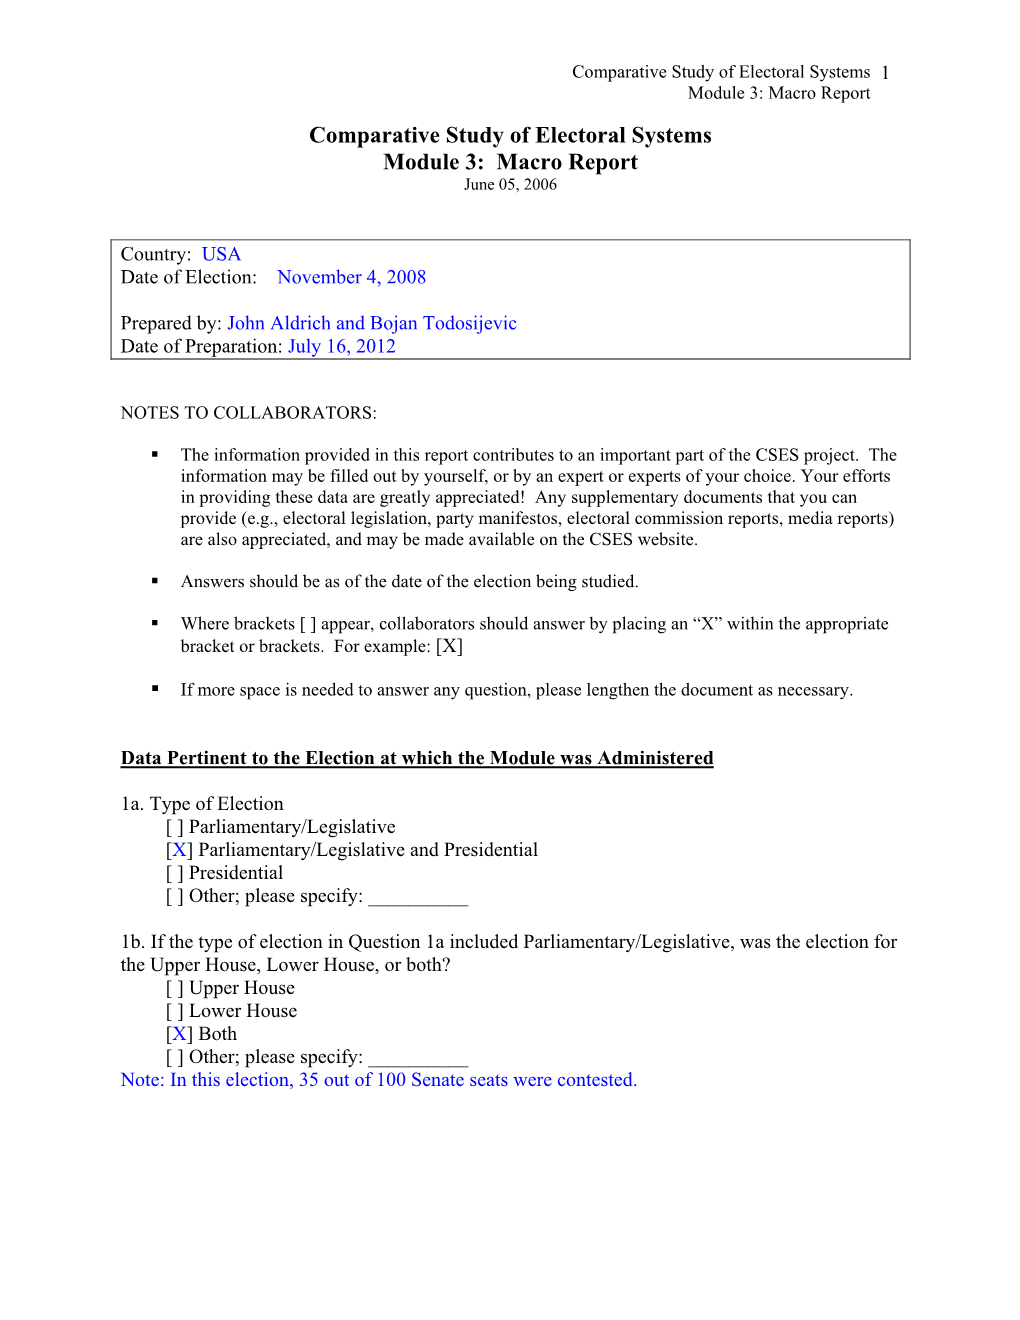 Macro Report Comparative Study of Electoral Systems Module 3: Macro Report June 05, 2006